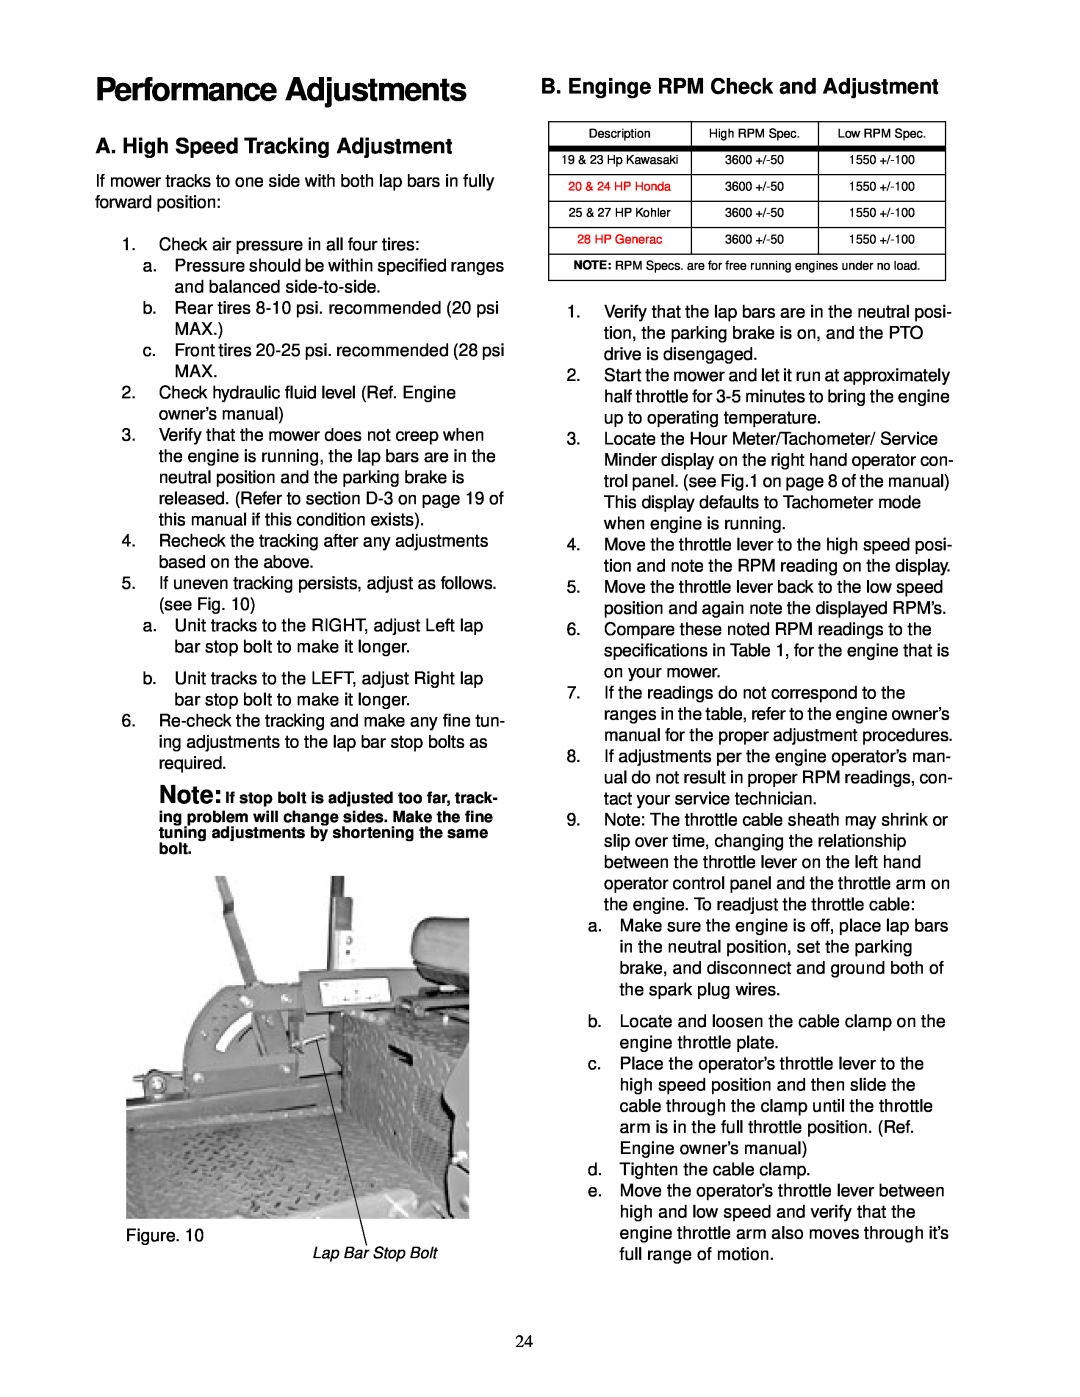 Cub Cadet service manual Performance Adjustments, A. High Speed Tracking Adjustment, B. Enginge RPM Check and Adjustment 